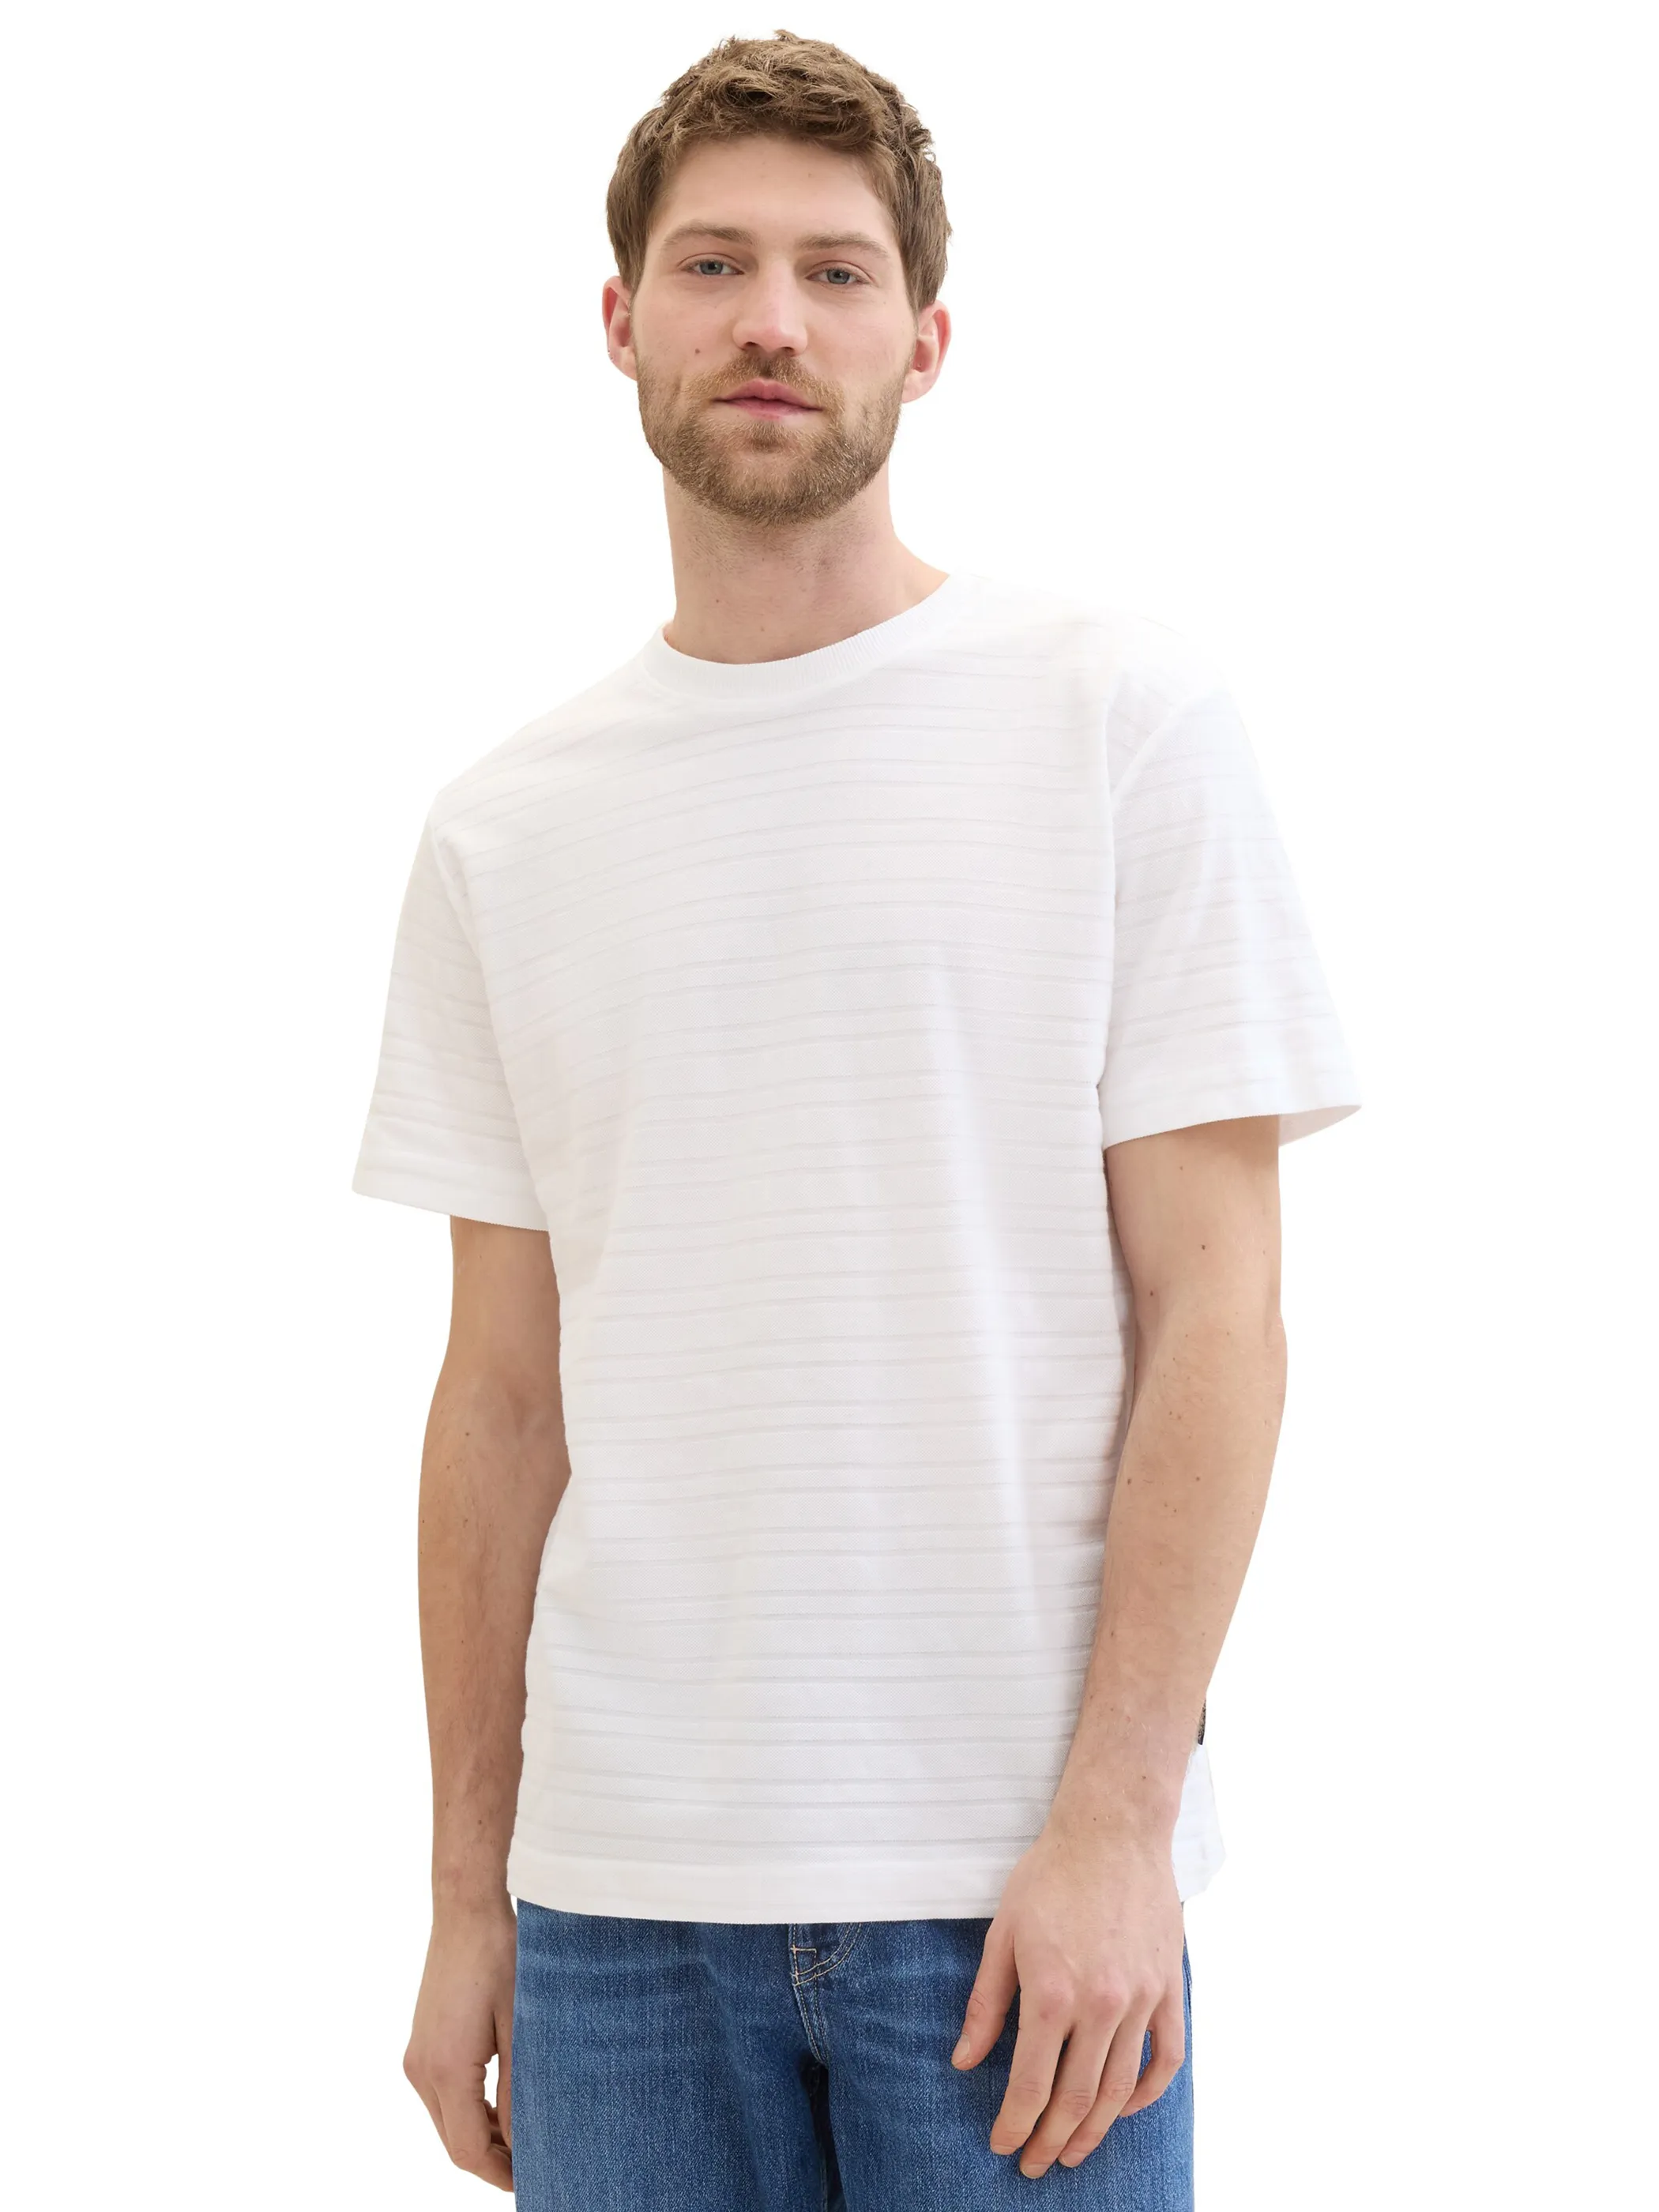 Tom Tailor 1042131 structured t-shirt Weiß 895628 20000 4